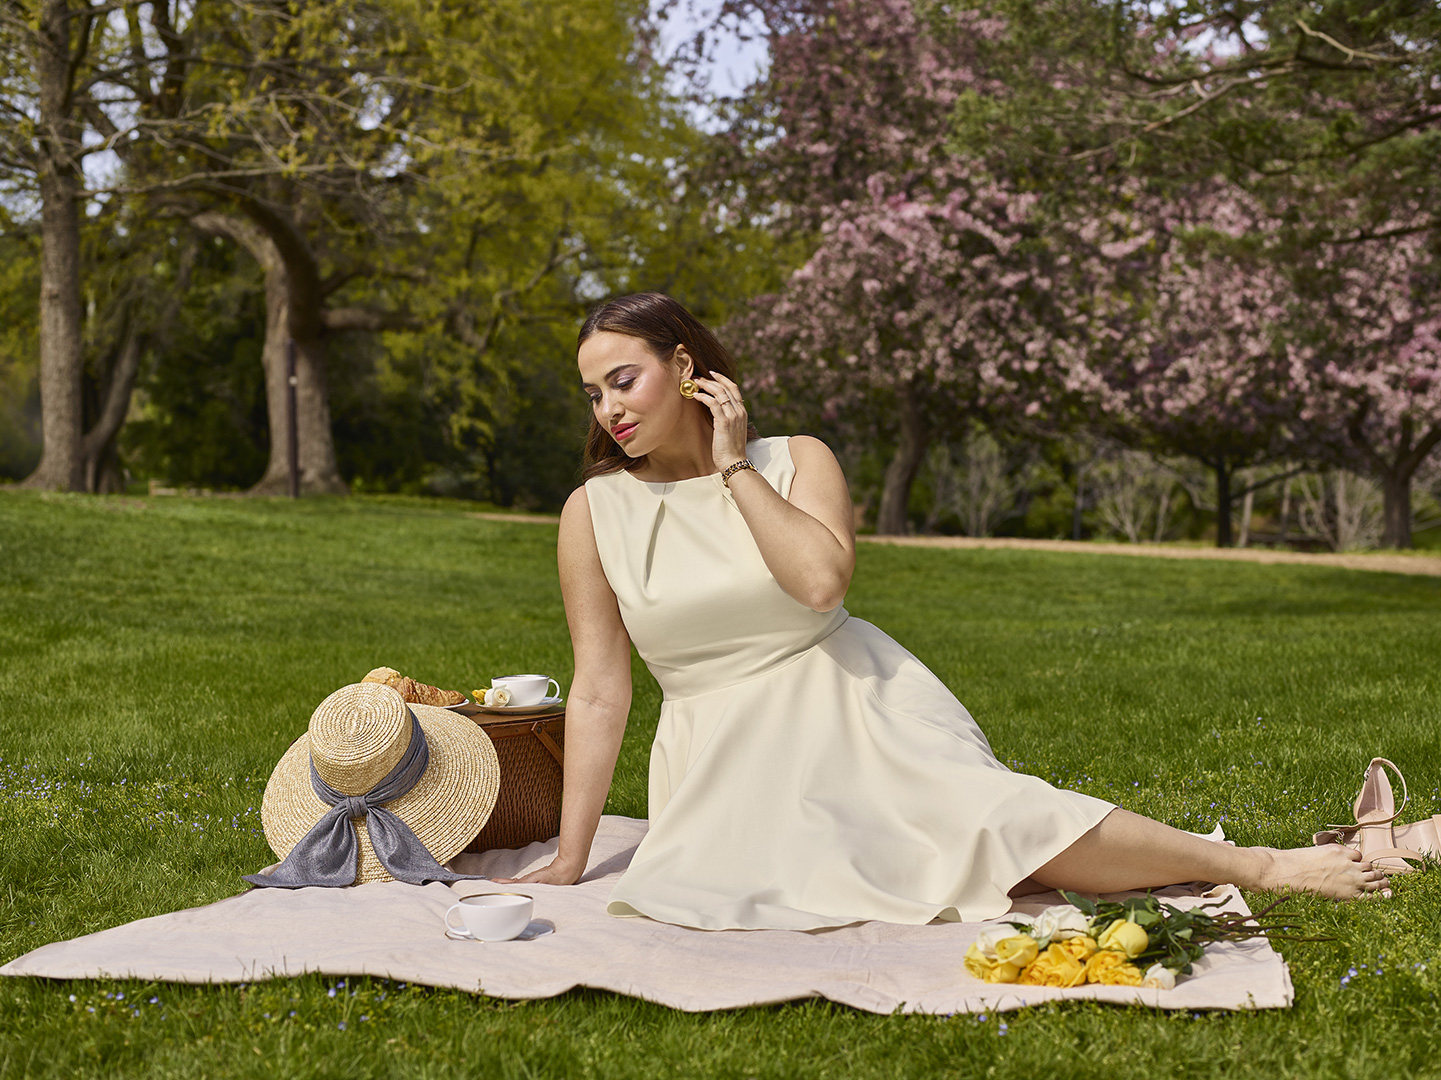 Women's Custom Clothing                                                                                                                                                                                                                                   , Women's Pearl White Sleeveless Dress